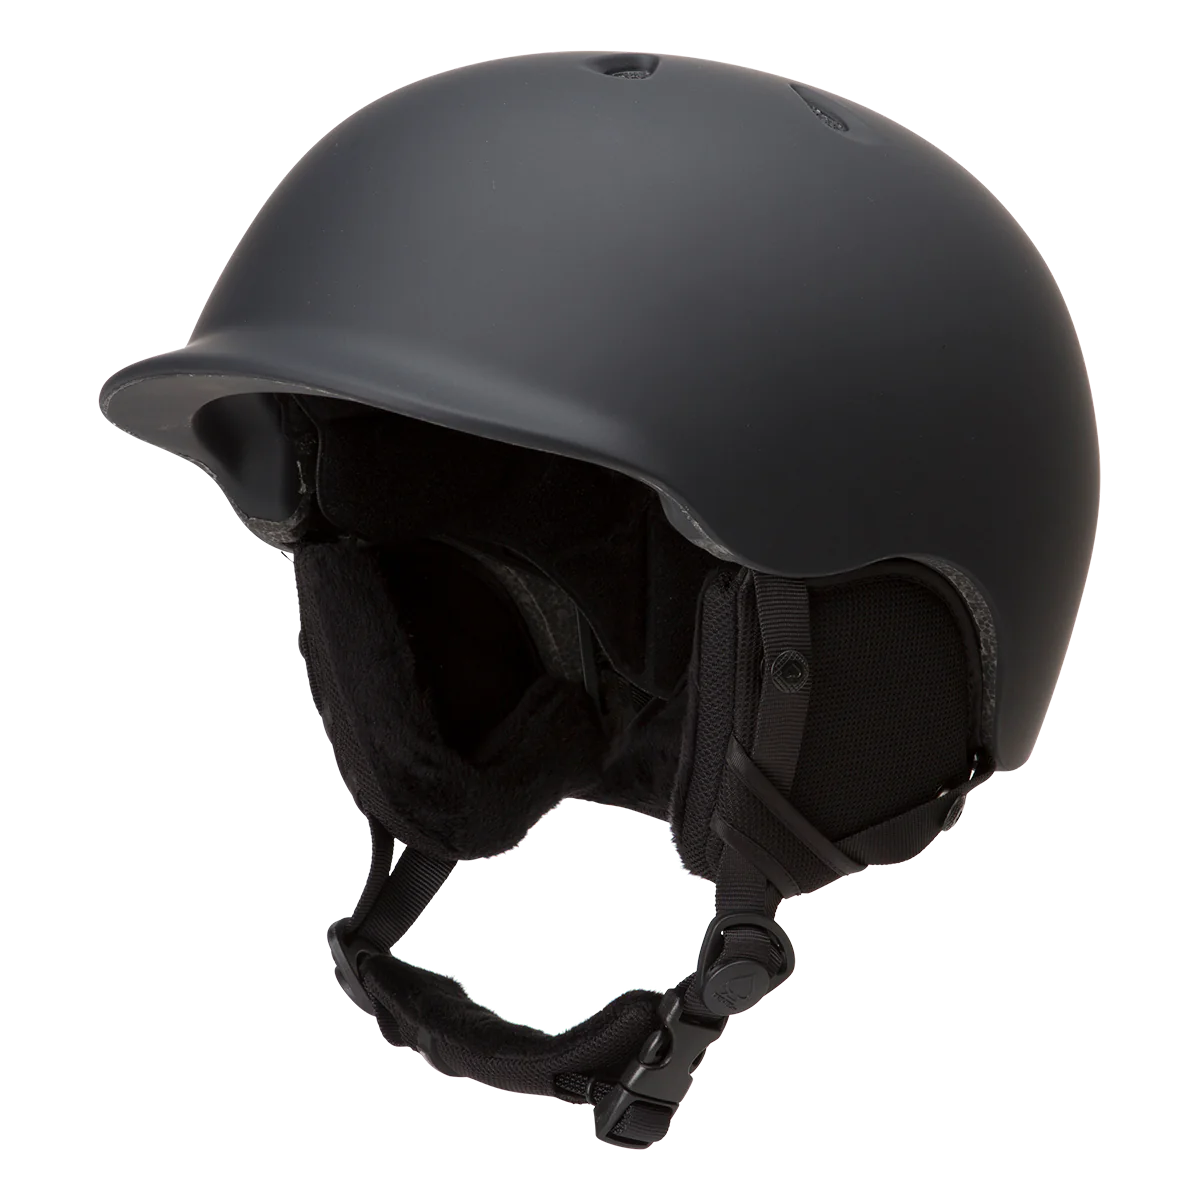 Pro-tec Riot helm stealth black